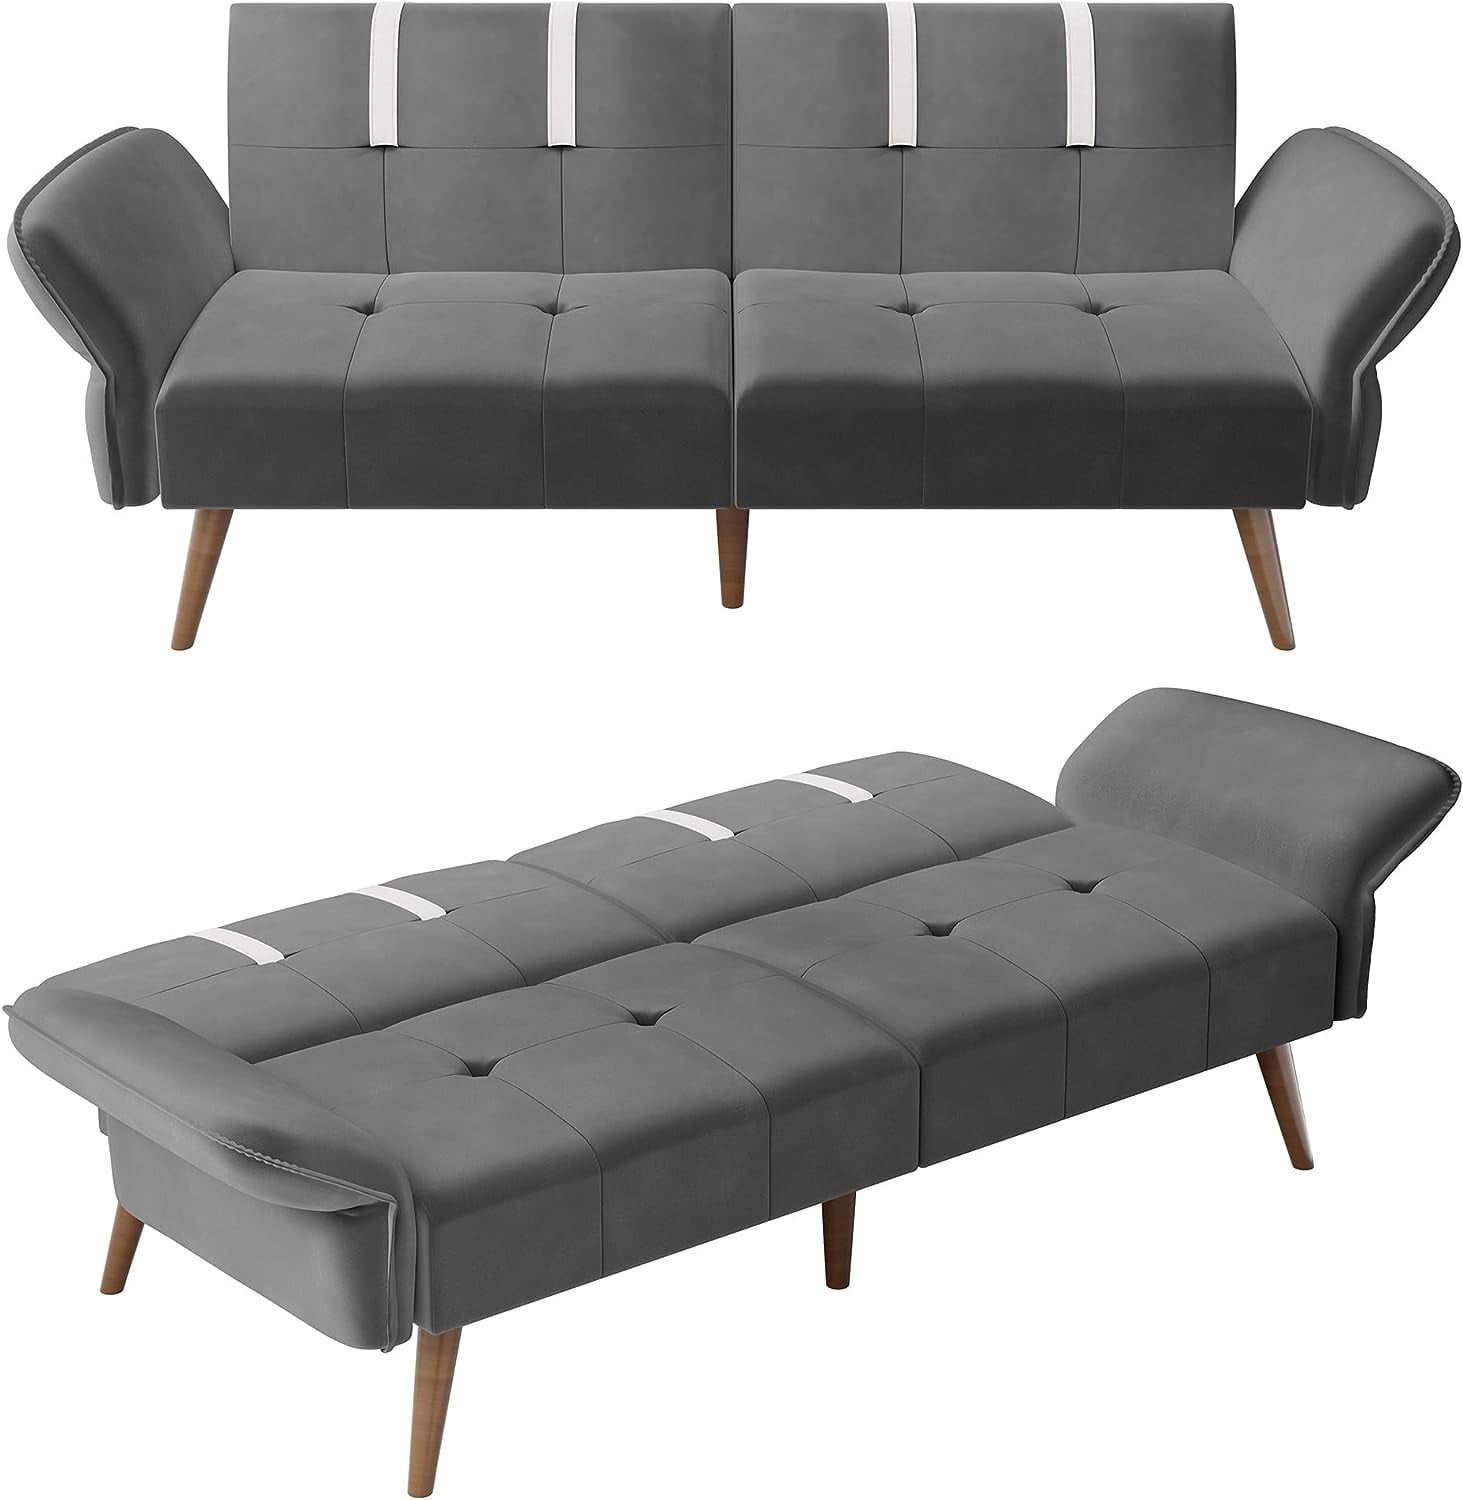 Walsunny 79" Velvet Futon Couch Sofa Bed, Folding Sleeper Loveseat with Adjustable Armrests Backrest Dark Grey - image 5 of 8